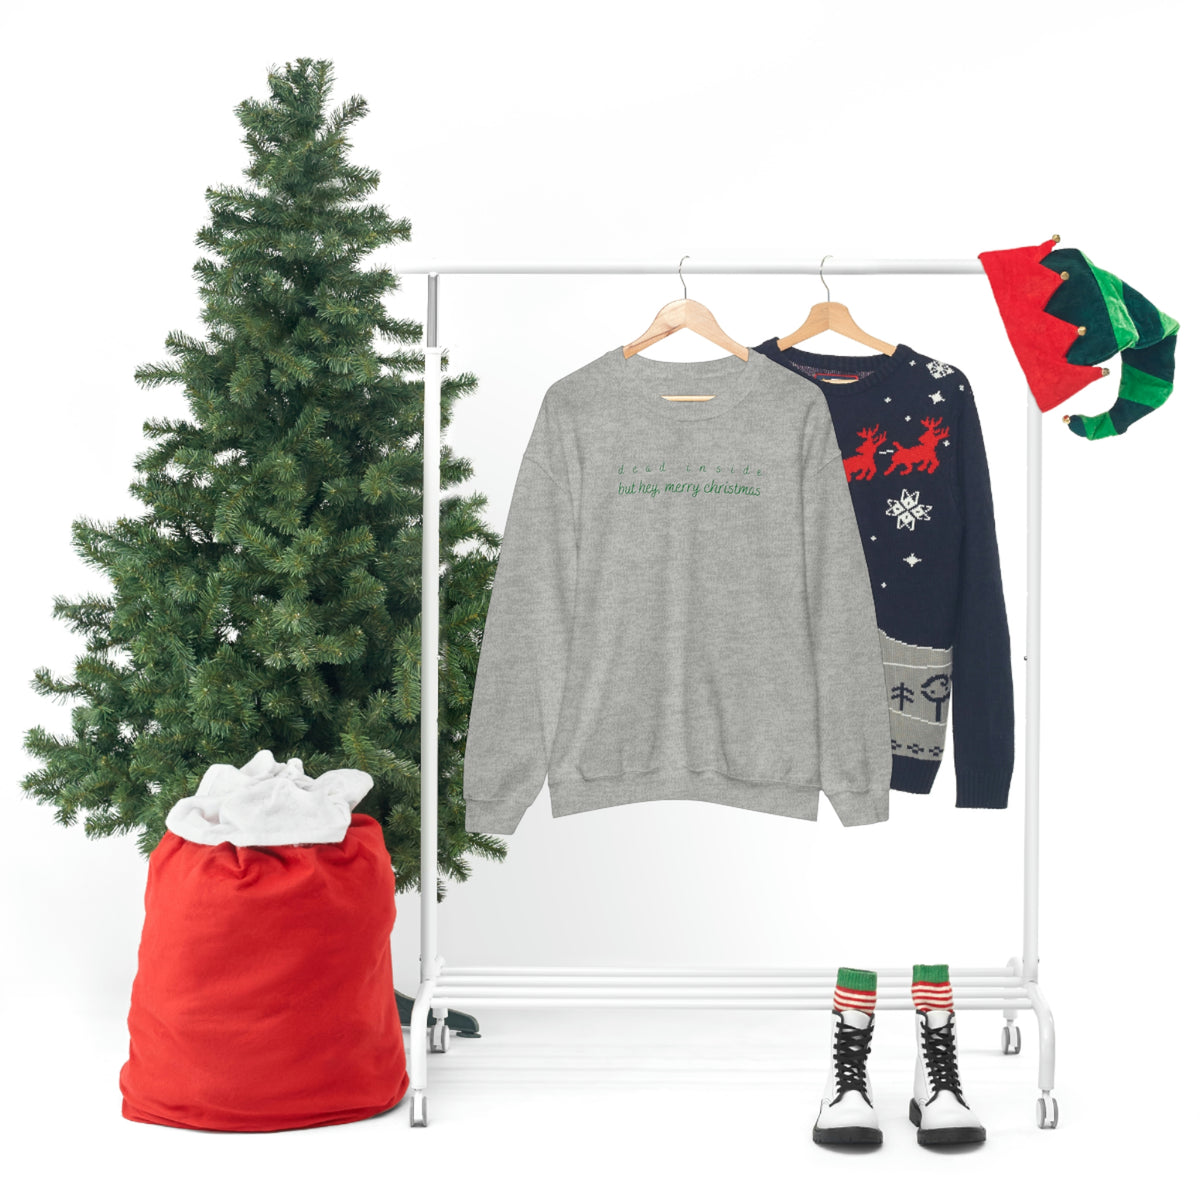 Christmas shirt, Christmas sweatshirt, ugly sweater, dead inside shirt, funny holiday shirt